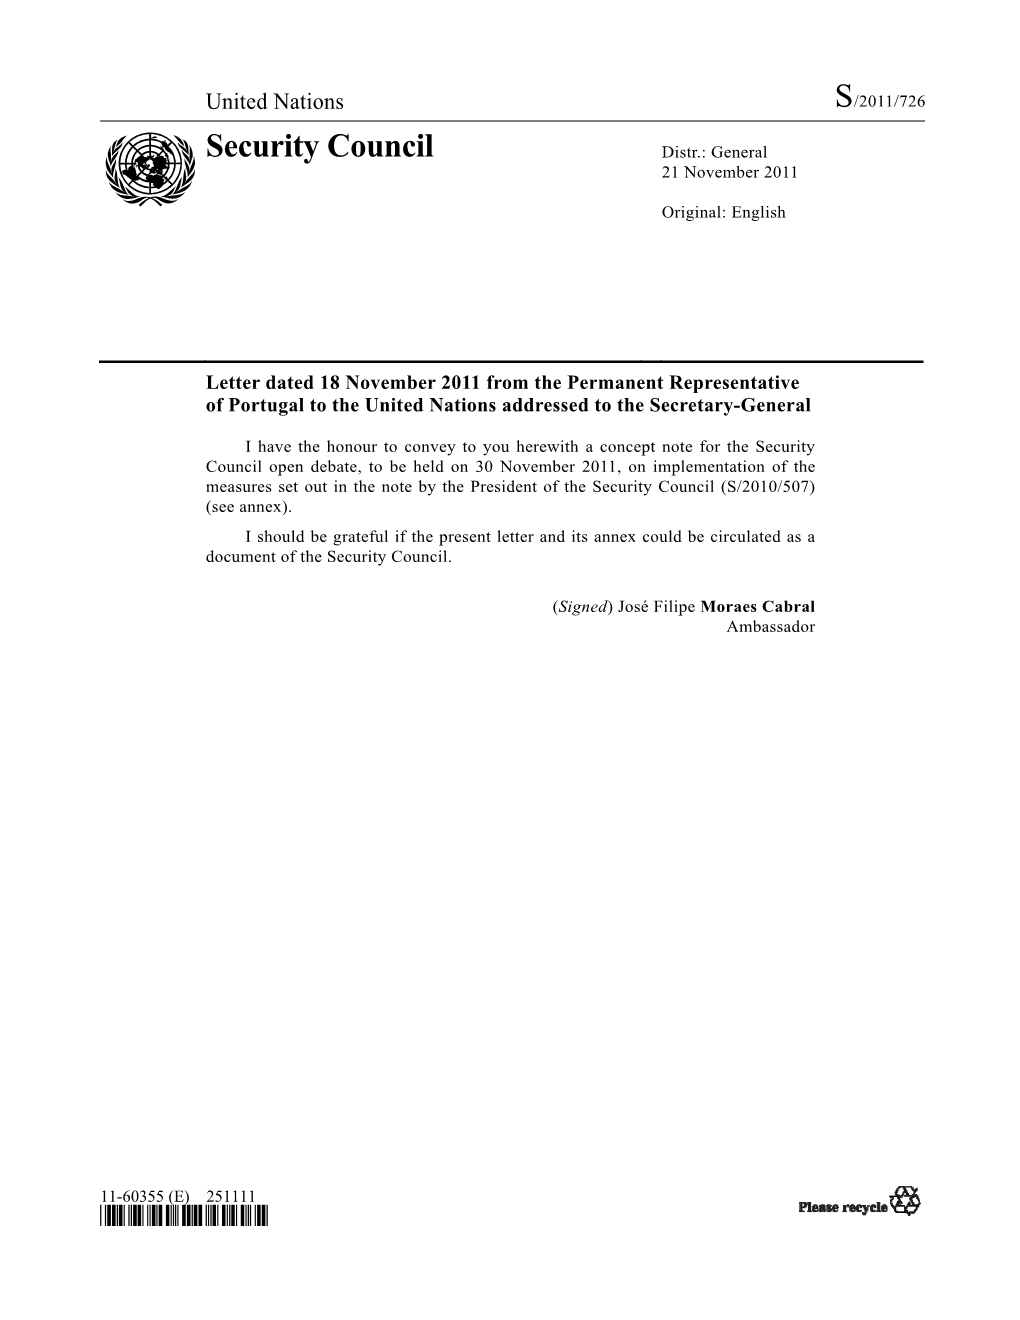 Security Council Distr.: General 21 November 2011